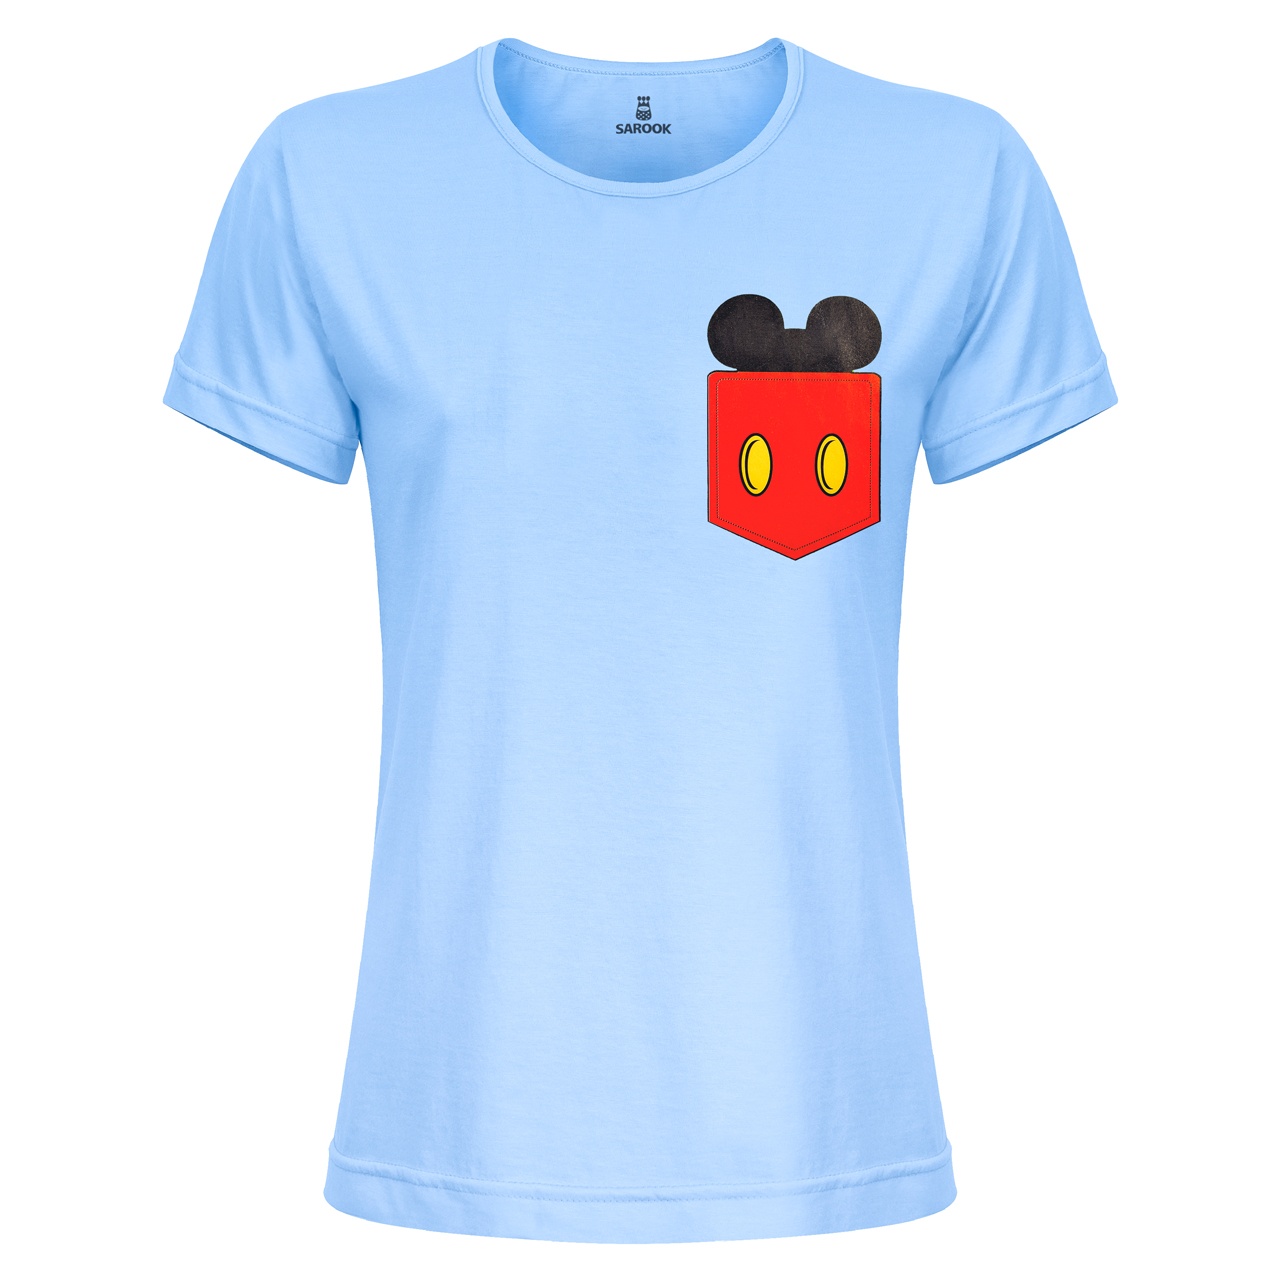 تی شرت زنانه ساروک مدل TZYUYRCH-Mickey 03 رنگ آبی روشن